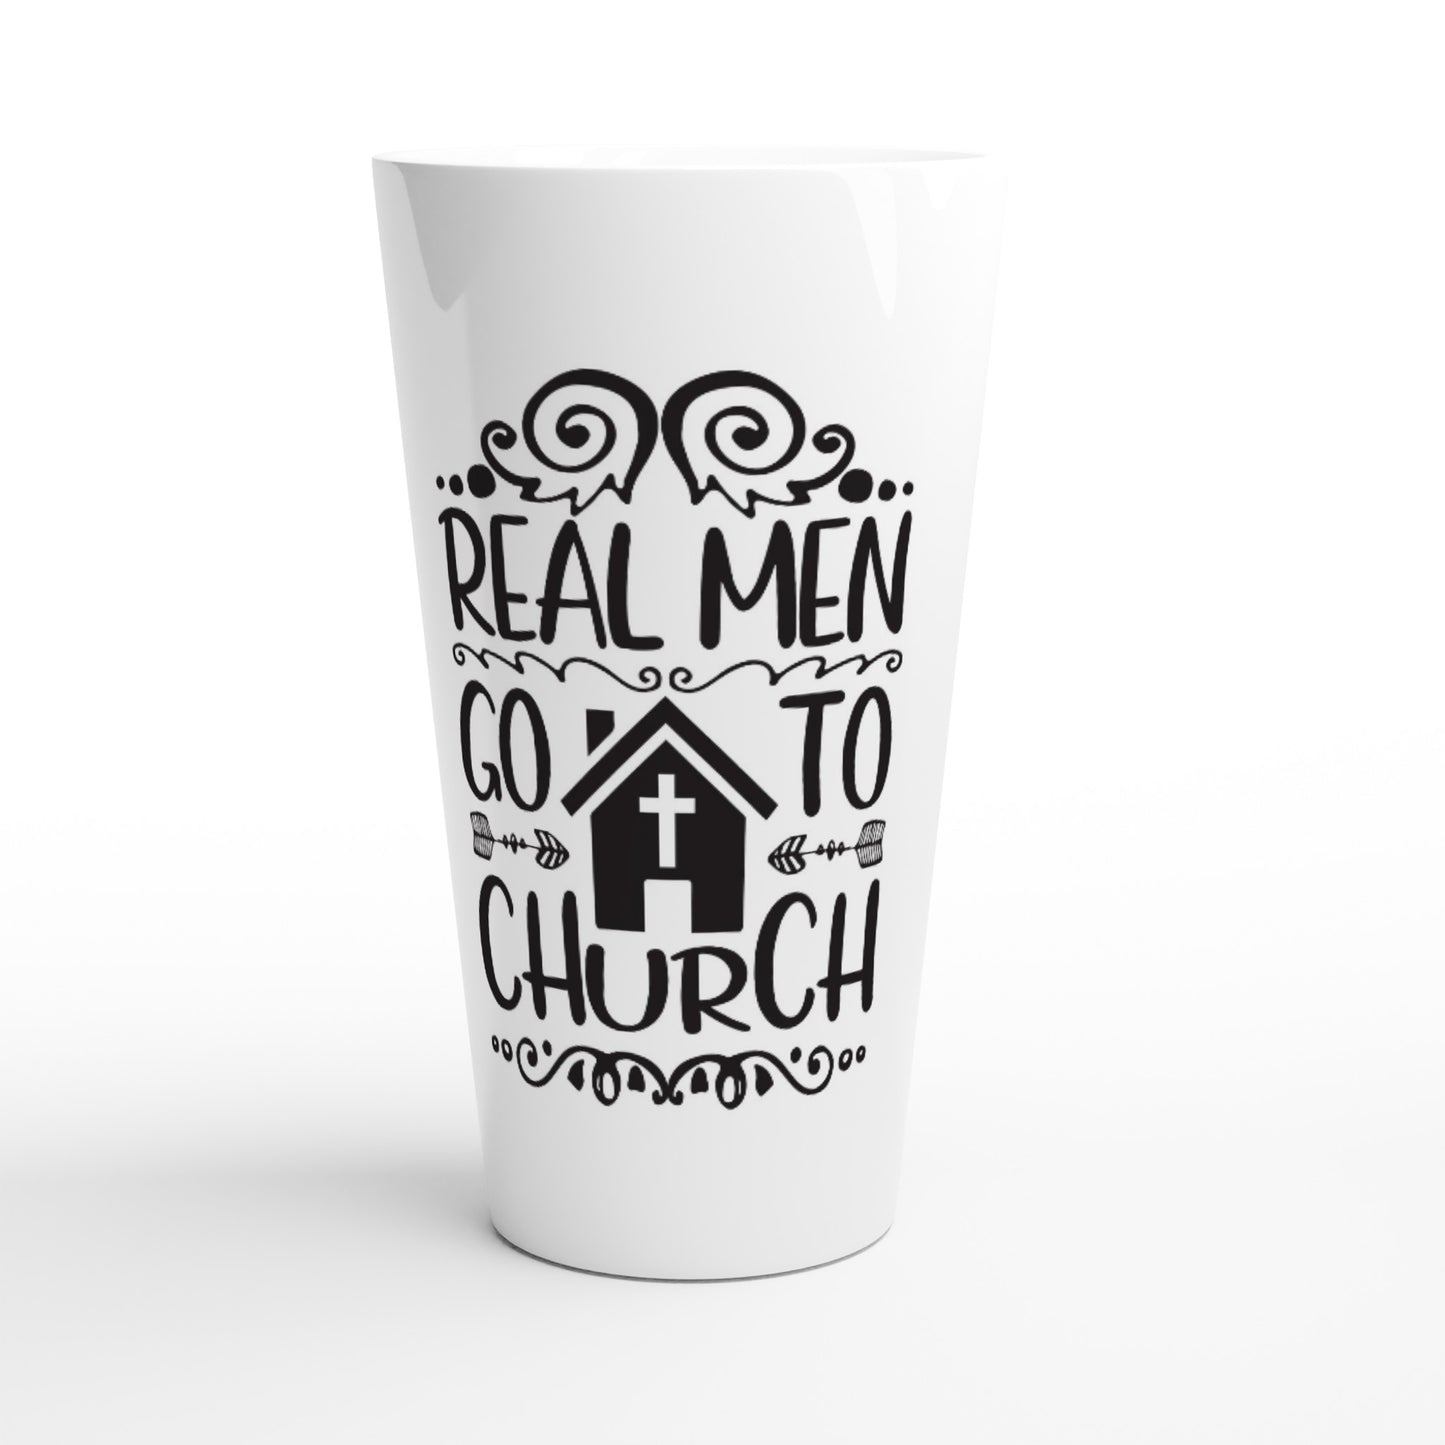 Real Men Go To Church - White Latte 17oz Ceramic Mug